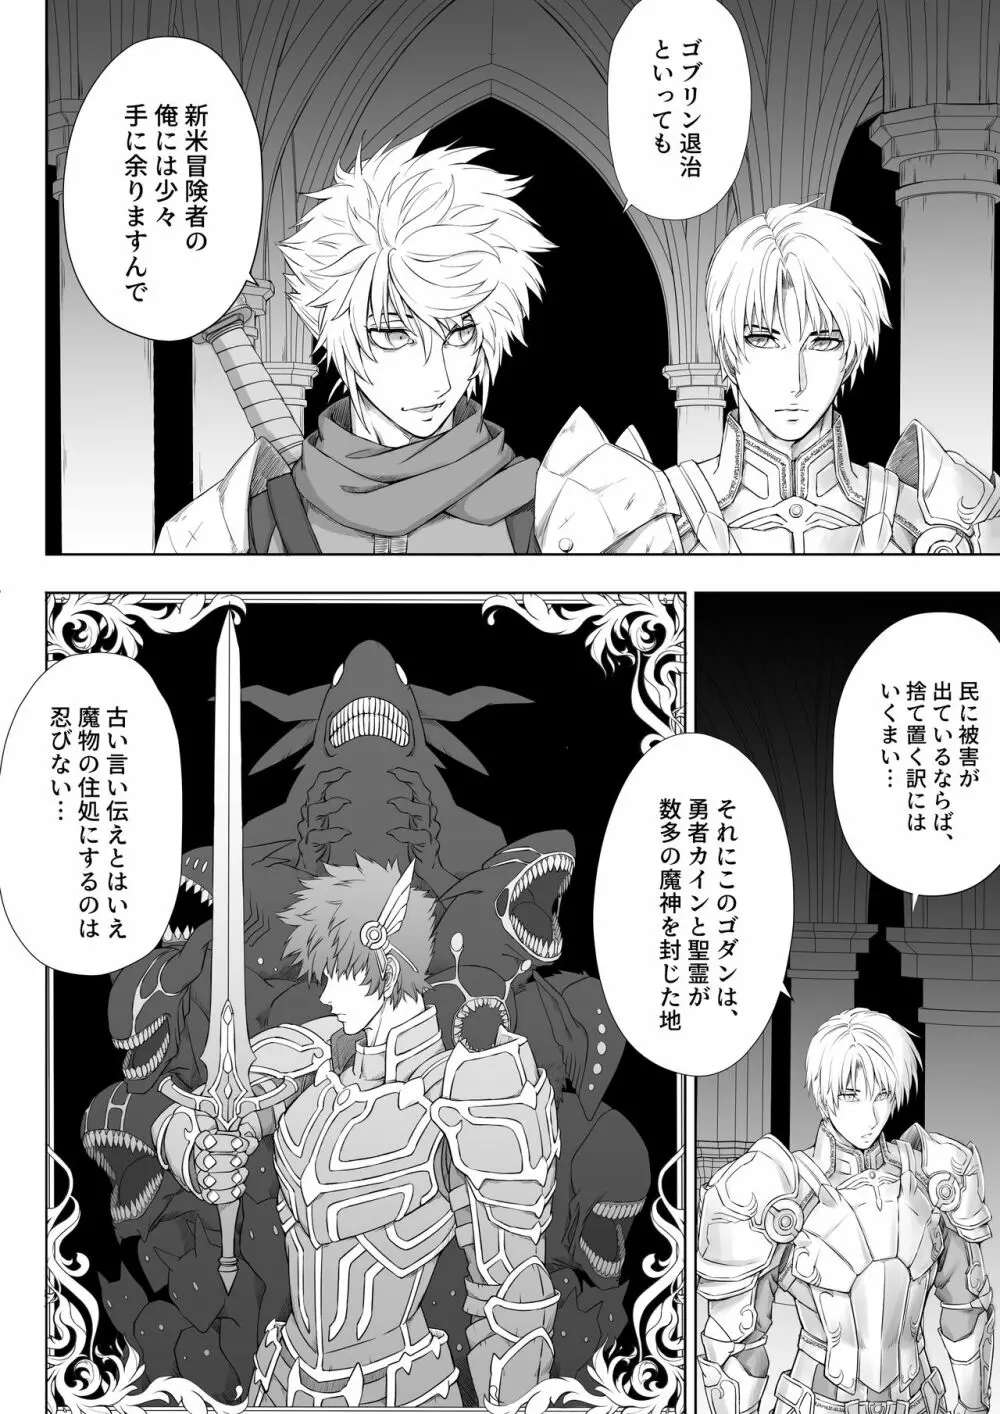 Knight of Labyrinth / ナイト オブ ラビリンス - page4